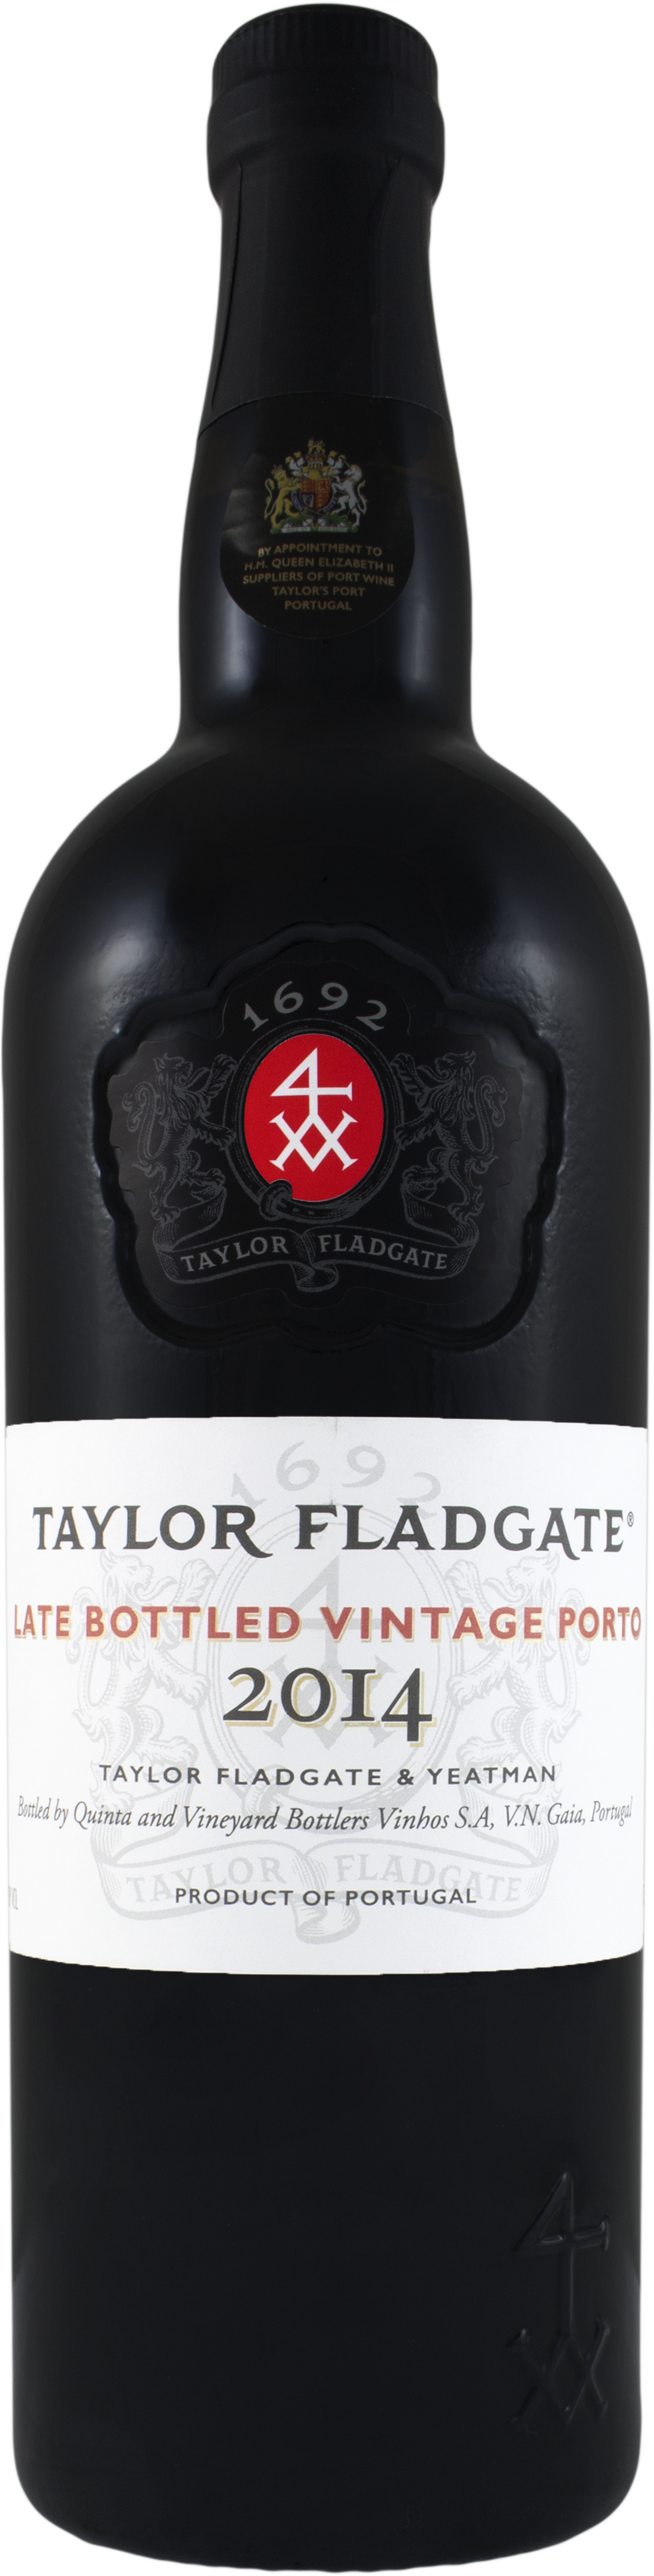 TAYLOR FLADGATE  LATE BOTTLED 2014 - Bk Wine Depot Corp